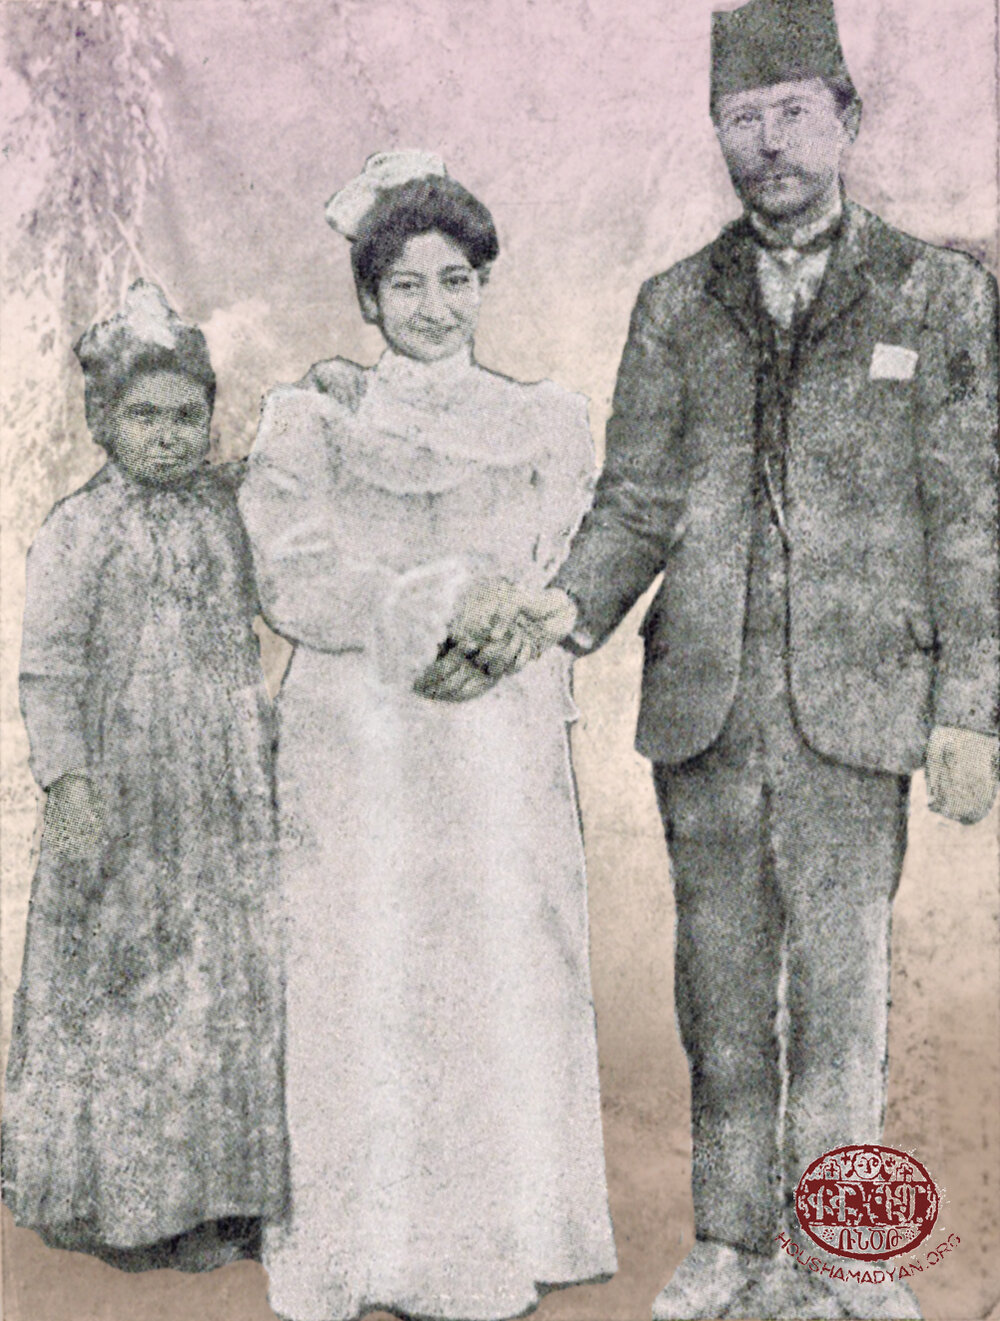 Wedding photo – 1908. Misak Keleshian and Srpouhie Keleshian (nee Baridian)